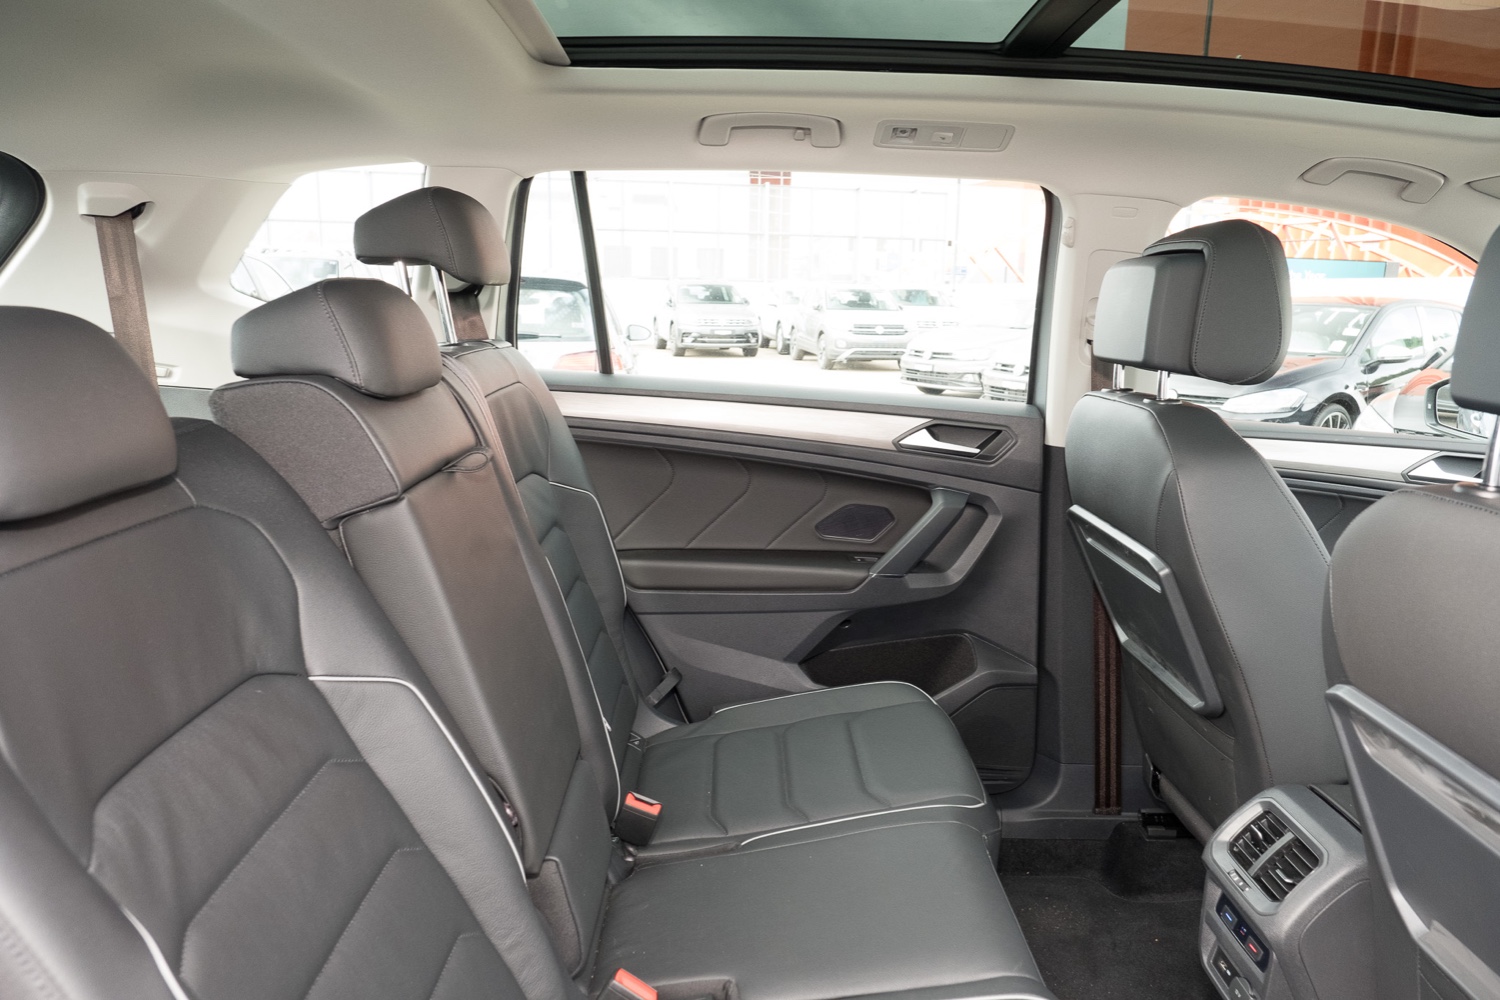 2019 MY20 Volkswagen Tiguan 5N 132TSI Comfortline Allspace SUV Image 15